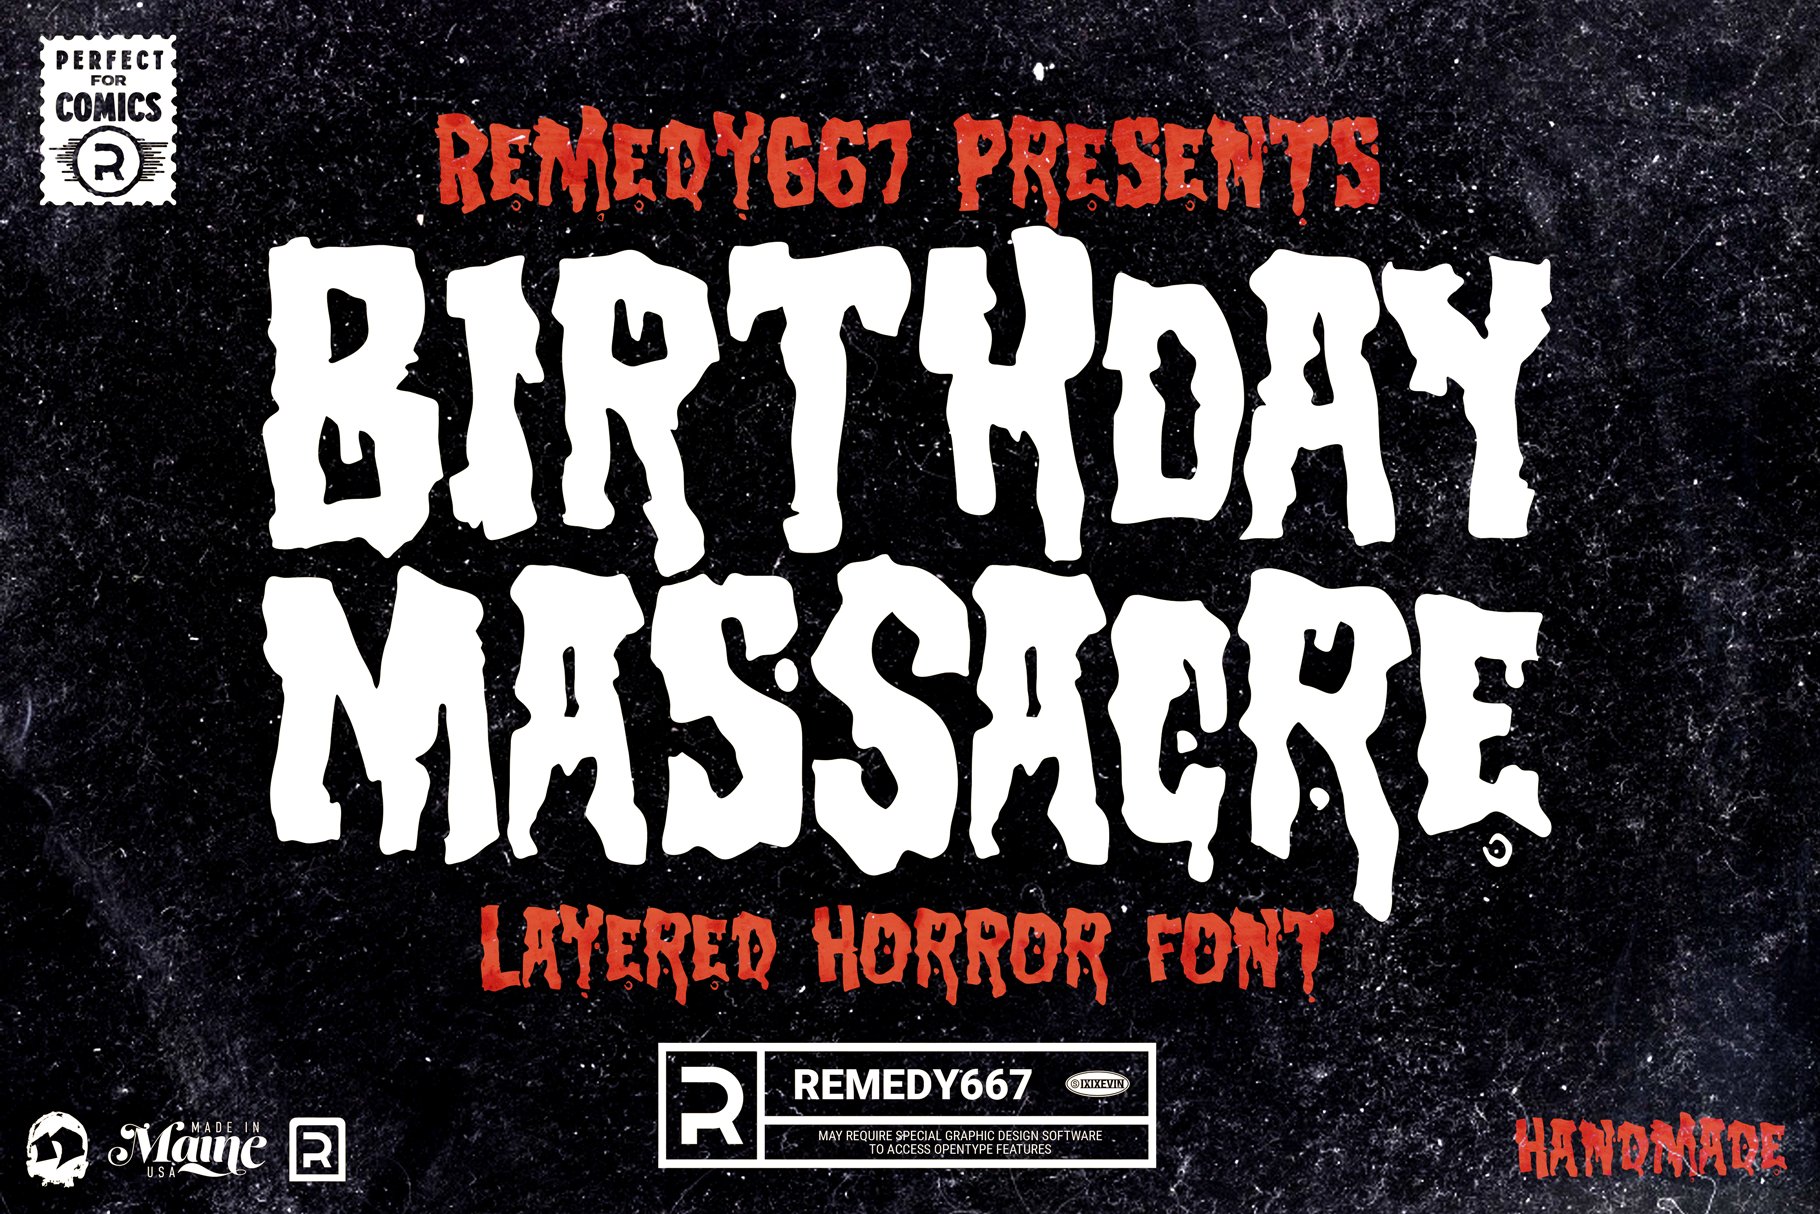 Birthday Massacre cover image.